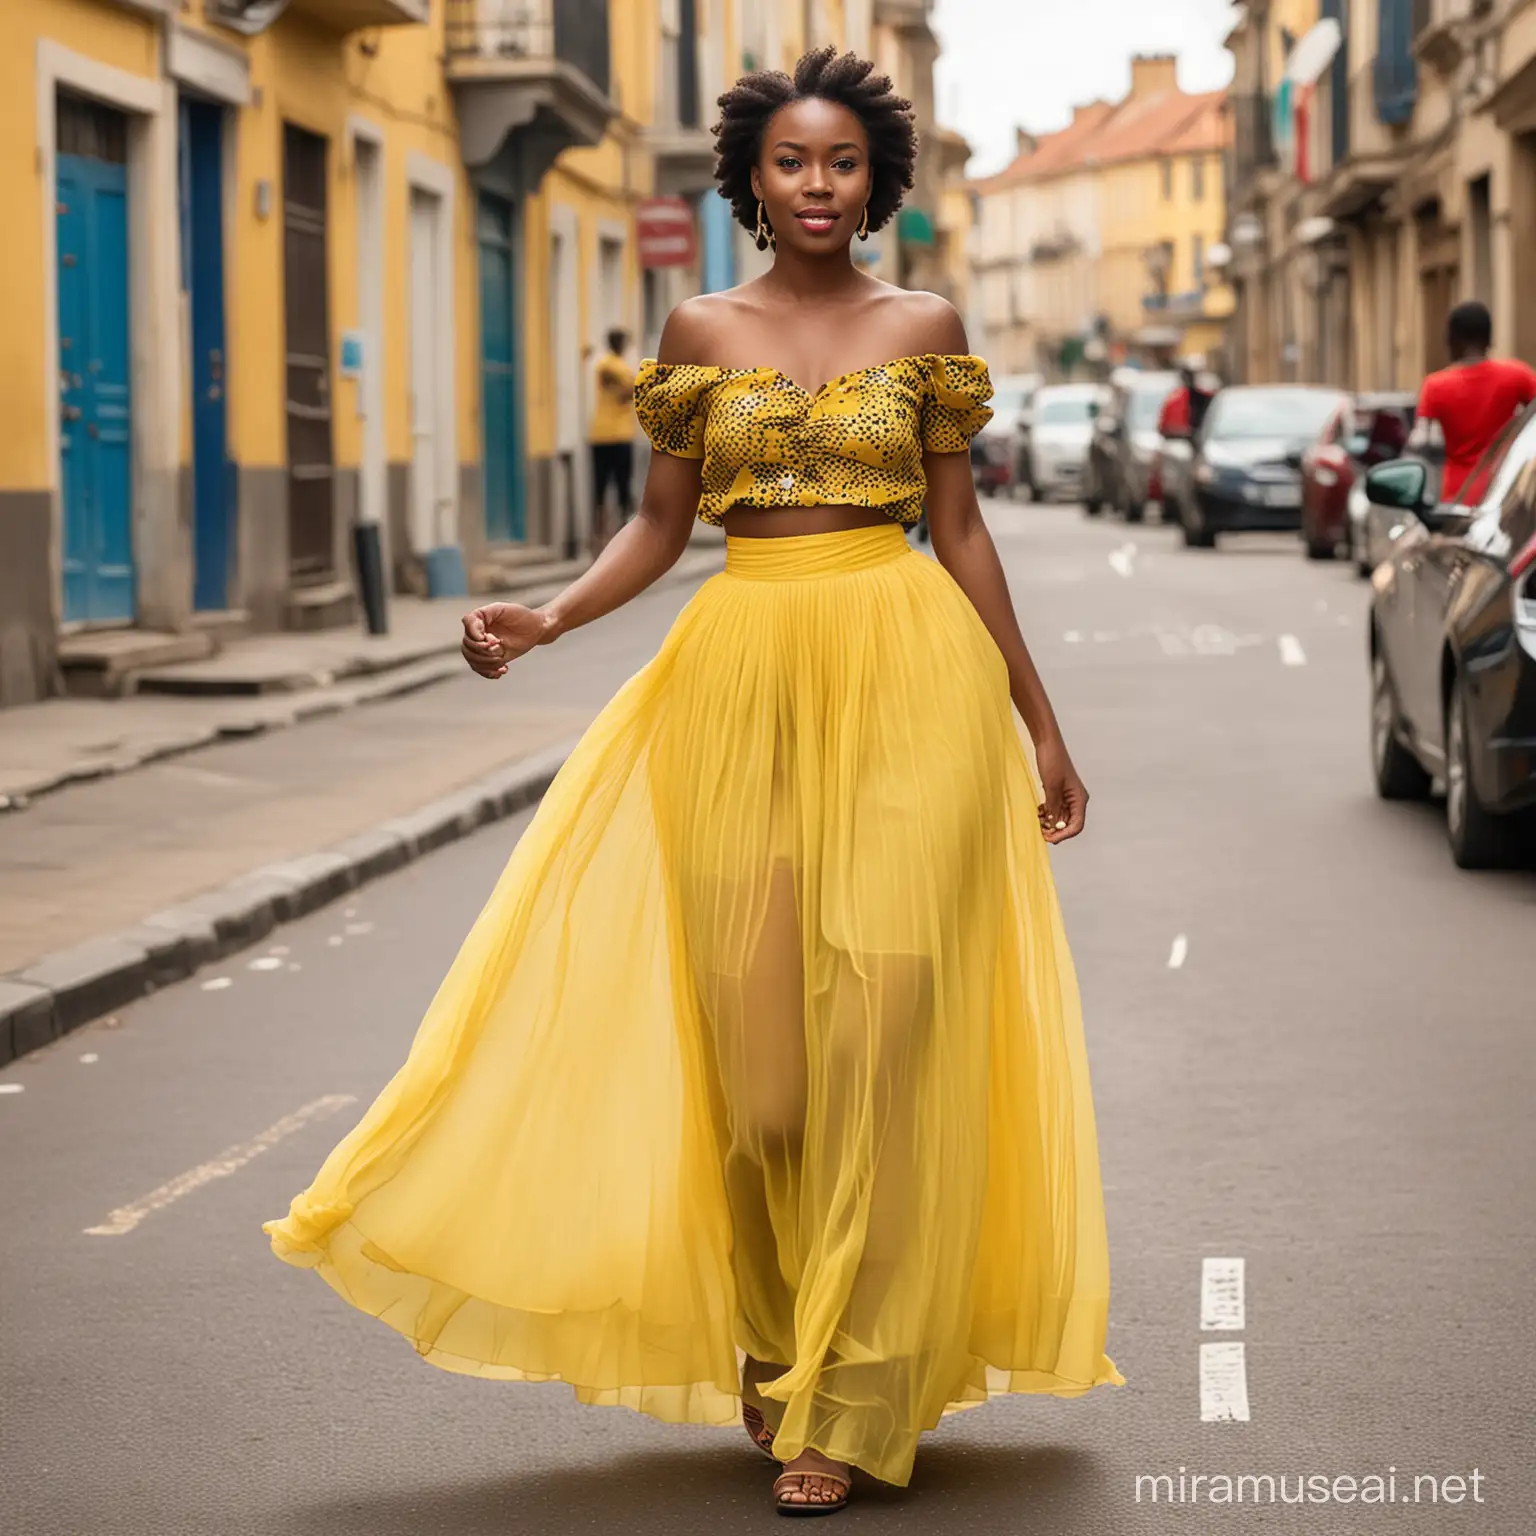 African Lady in Vibrant Yellow Chiffon Skirt Strolling Urban Street